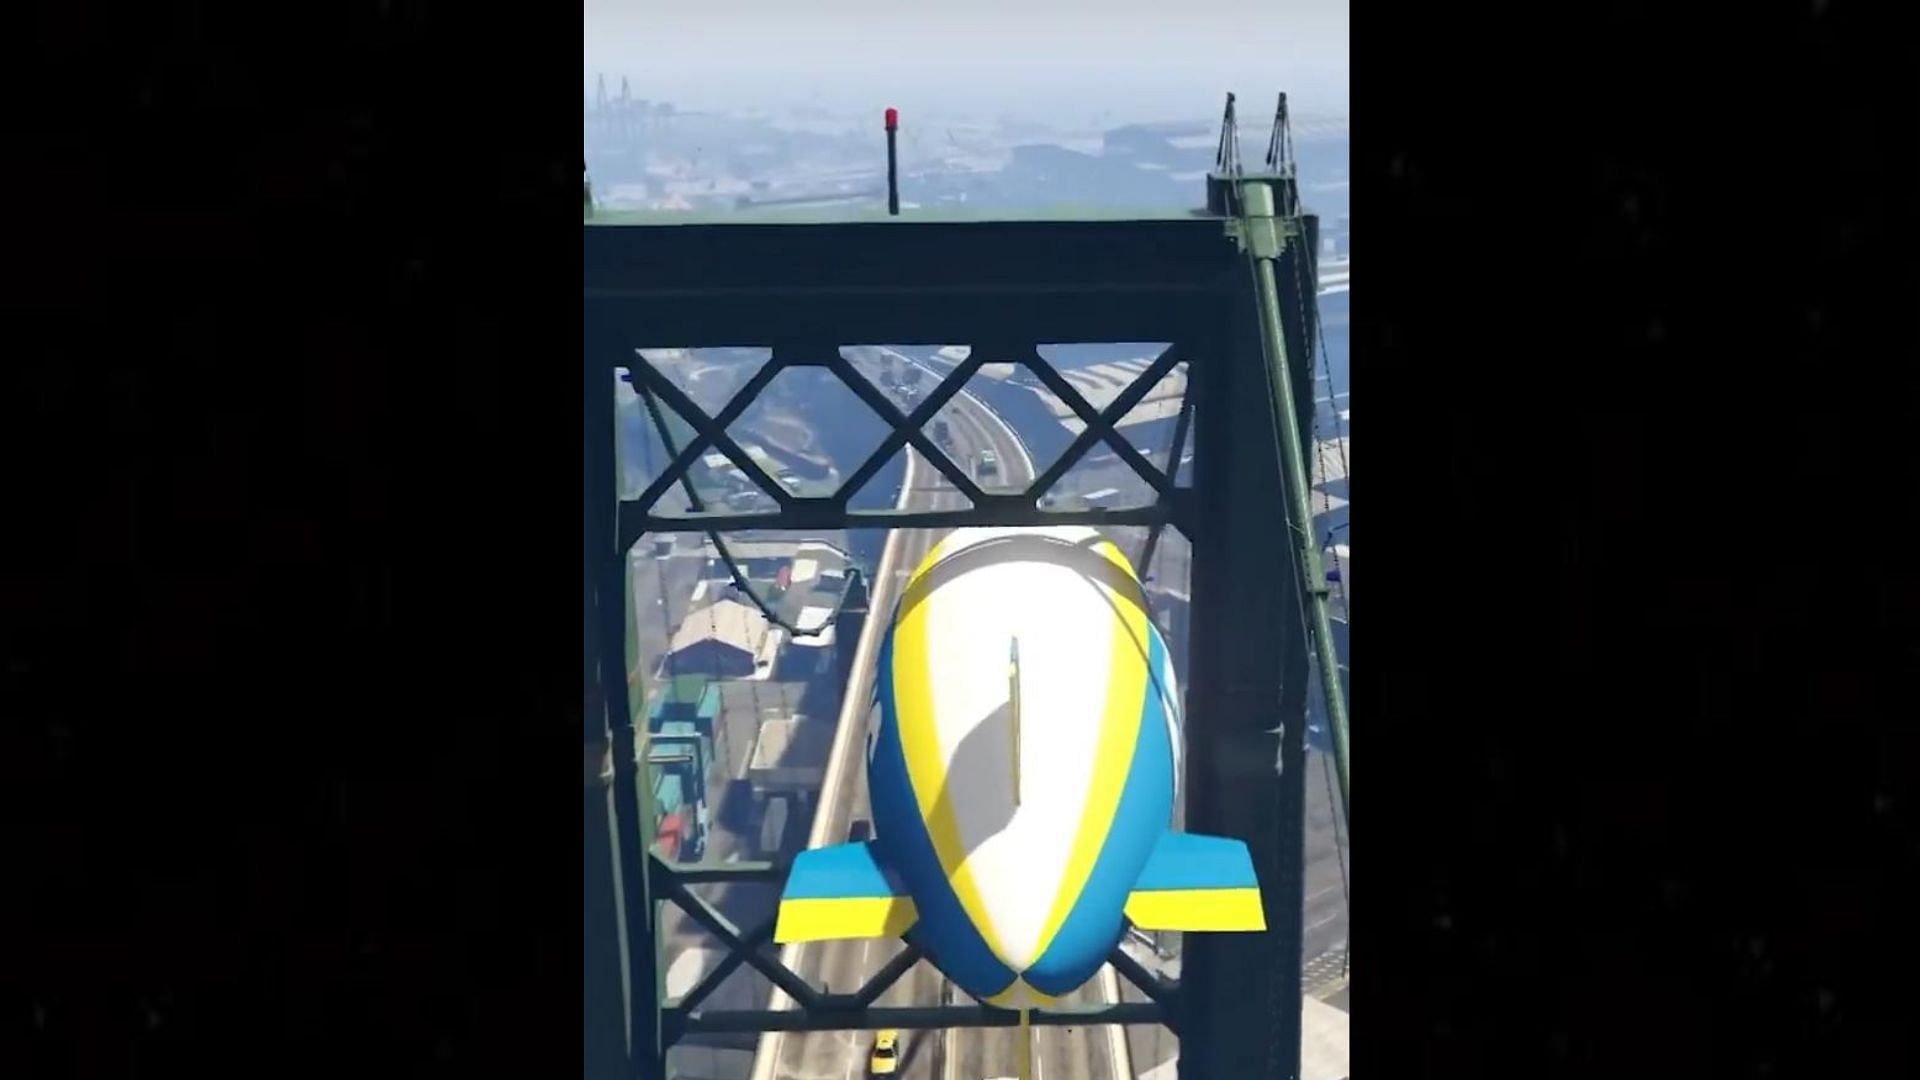 The Blimp can fit through the bridge (Image via YouTube/GrayStillPlays)